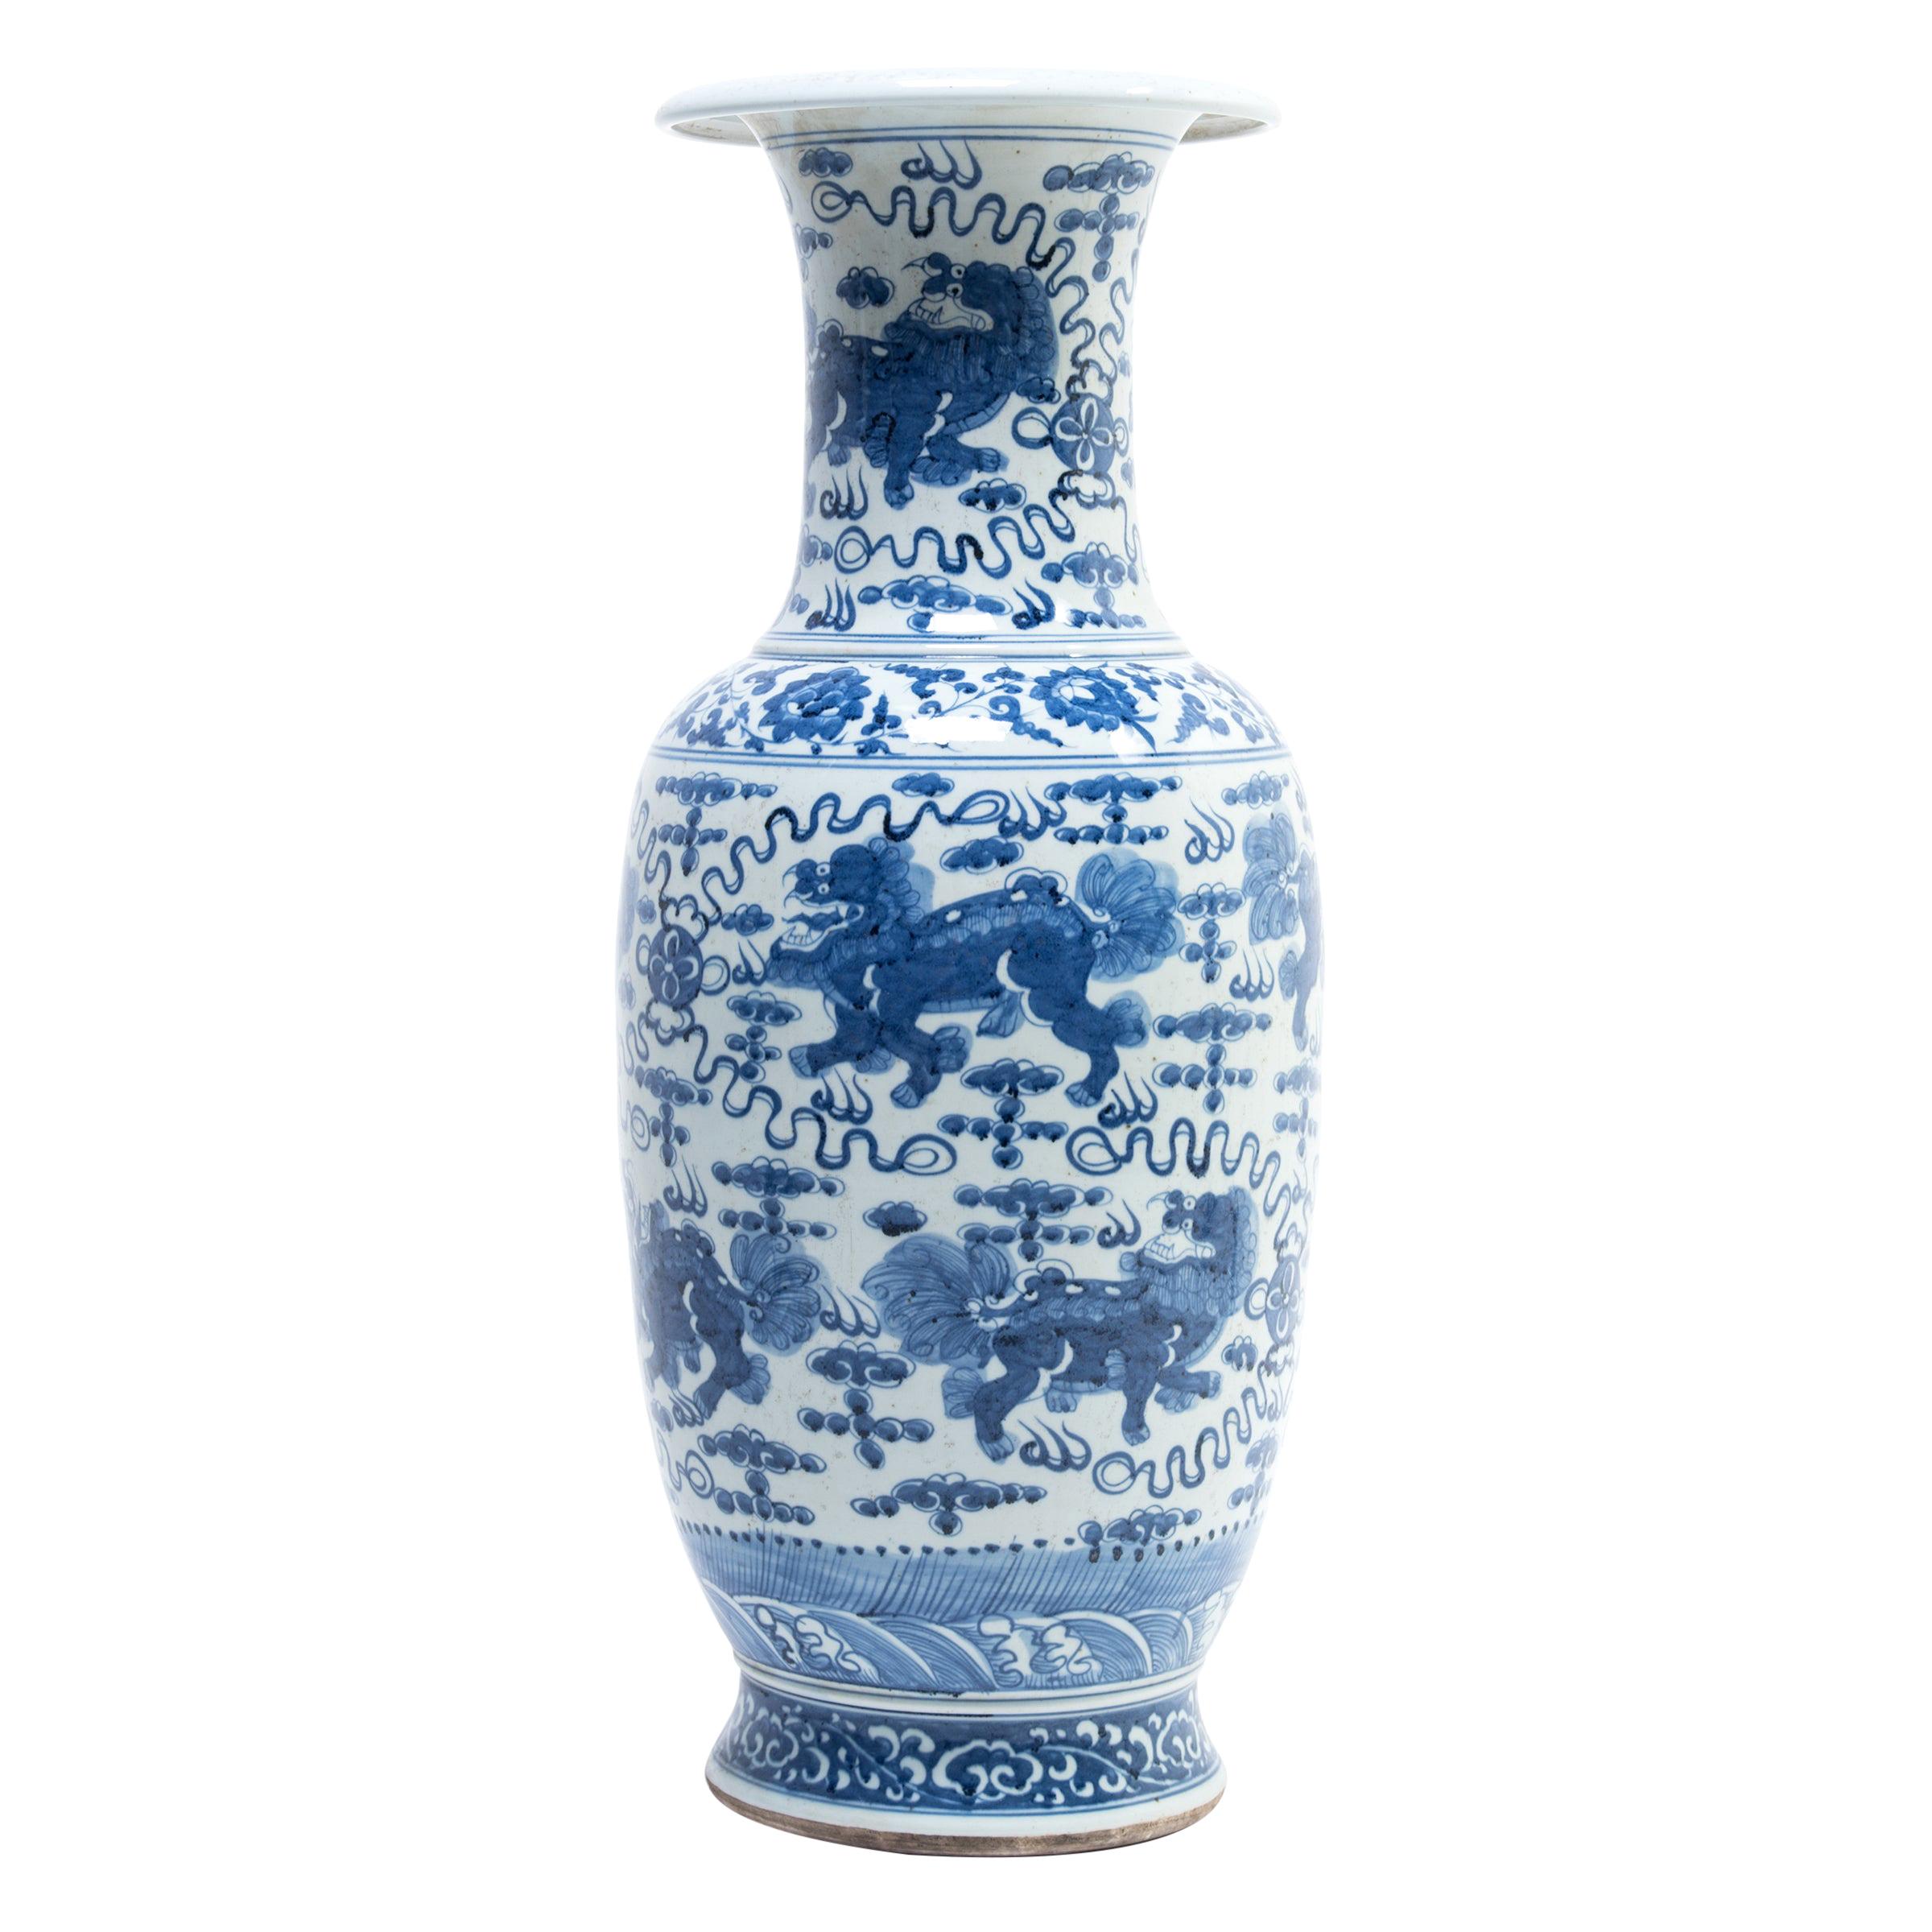 Grand vase chinois Qilin Fantail bleu et blanc en vente